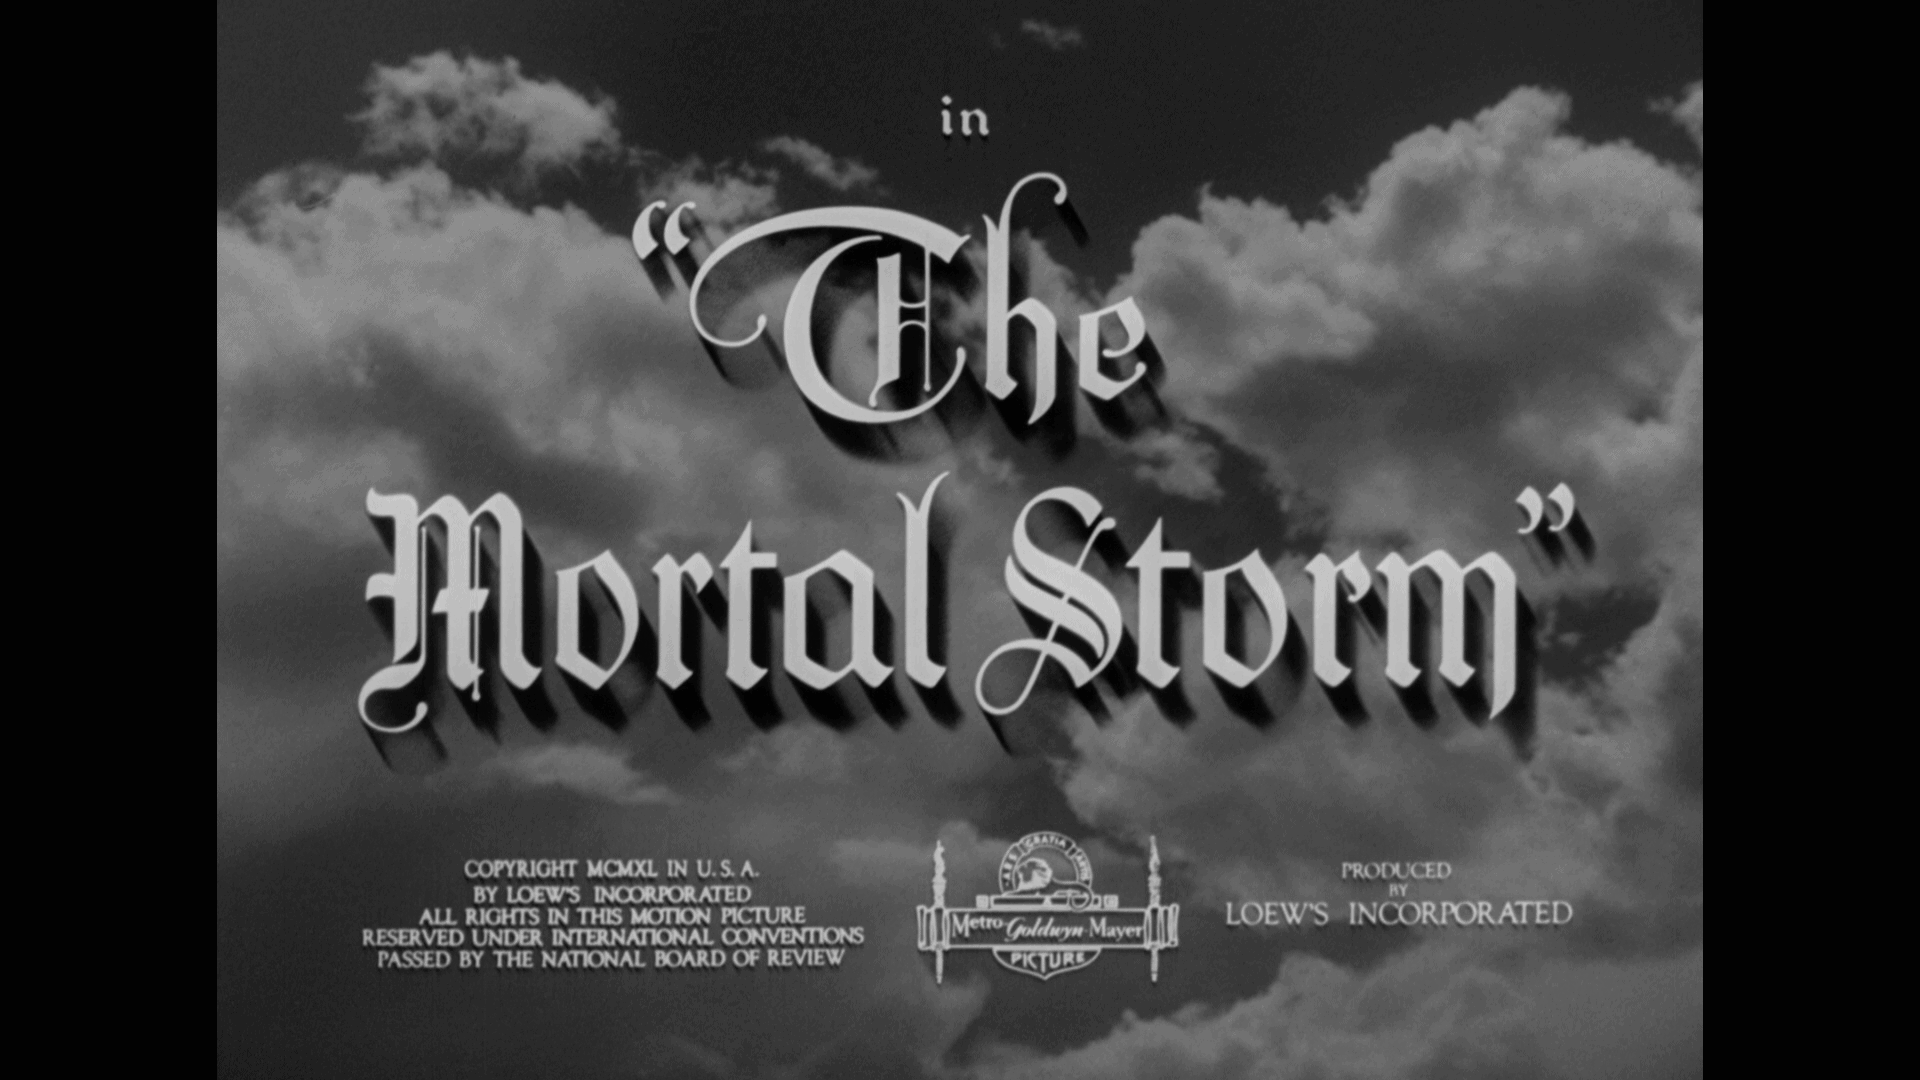 the mortal storm title warner archive